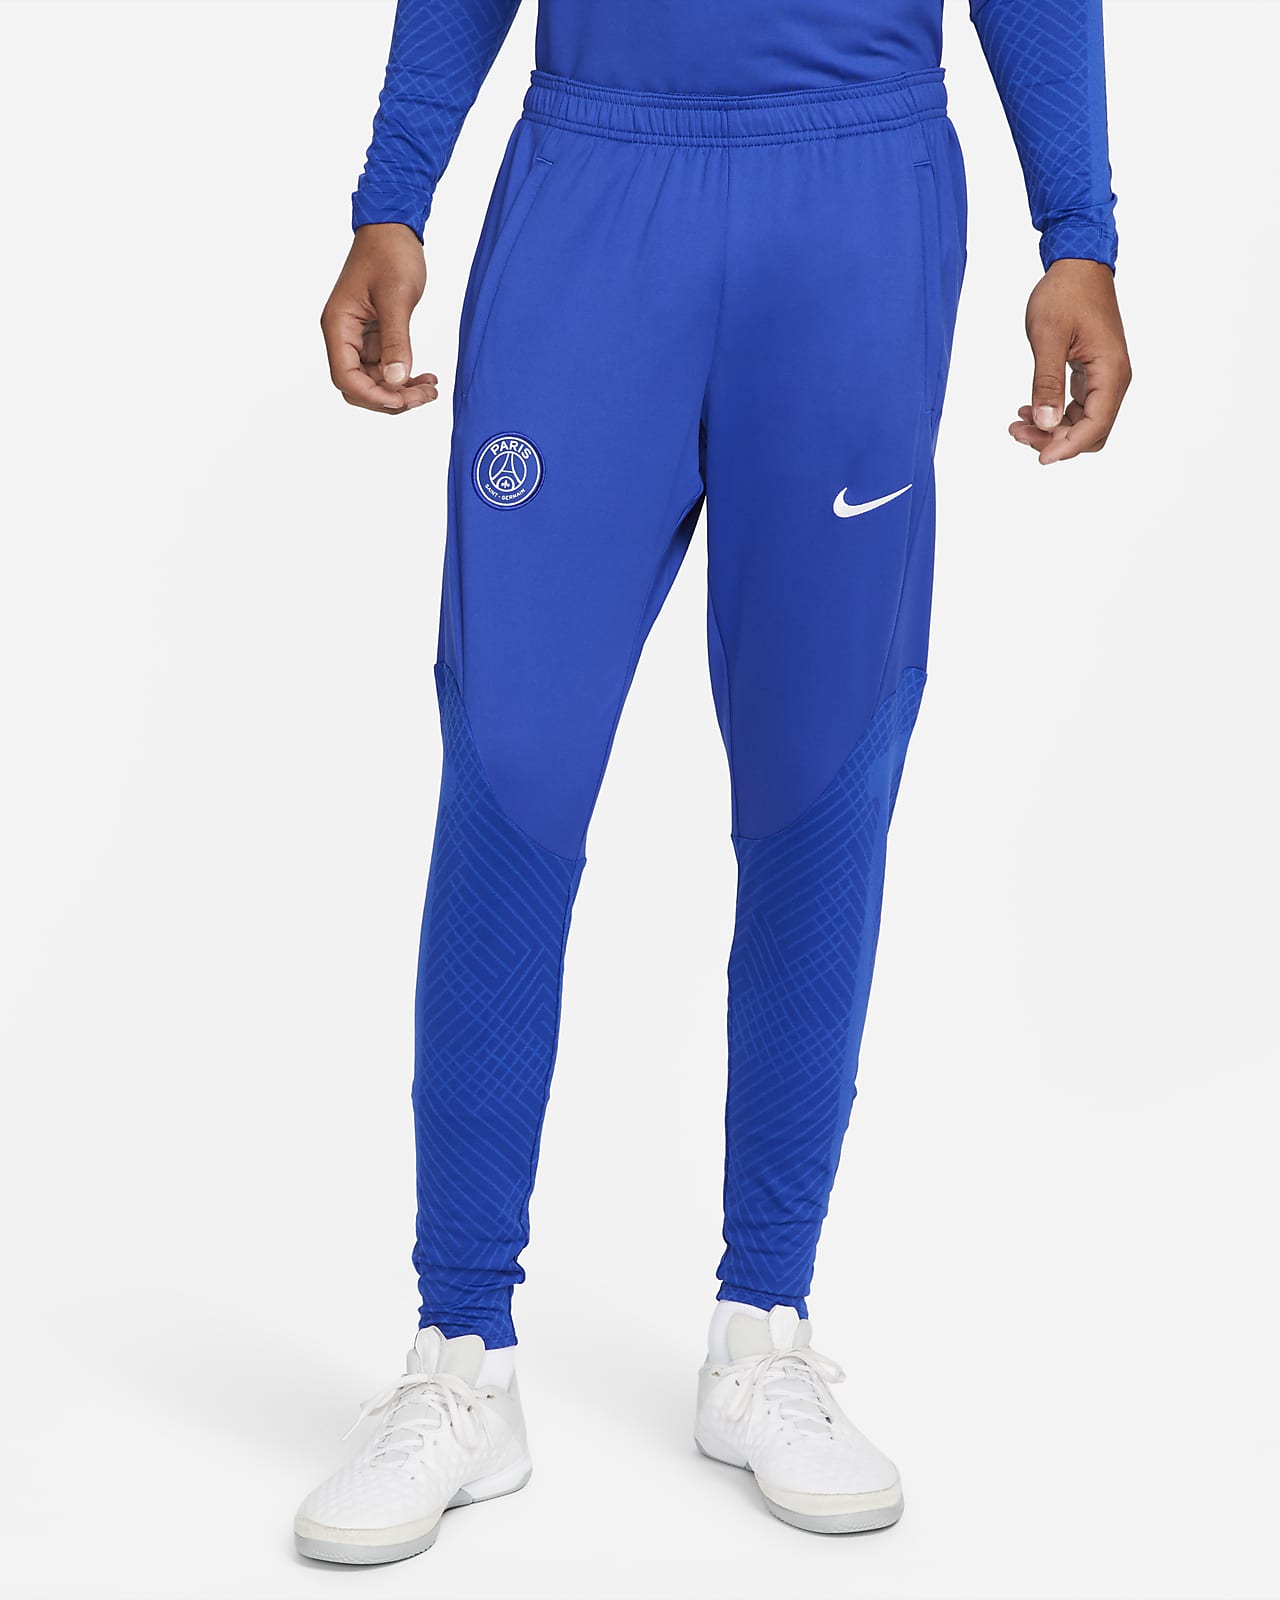 Nike Dri-FIT Knit Football Pants. Nike LU